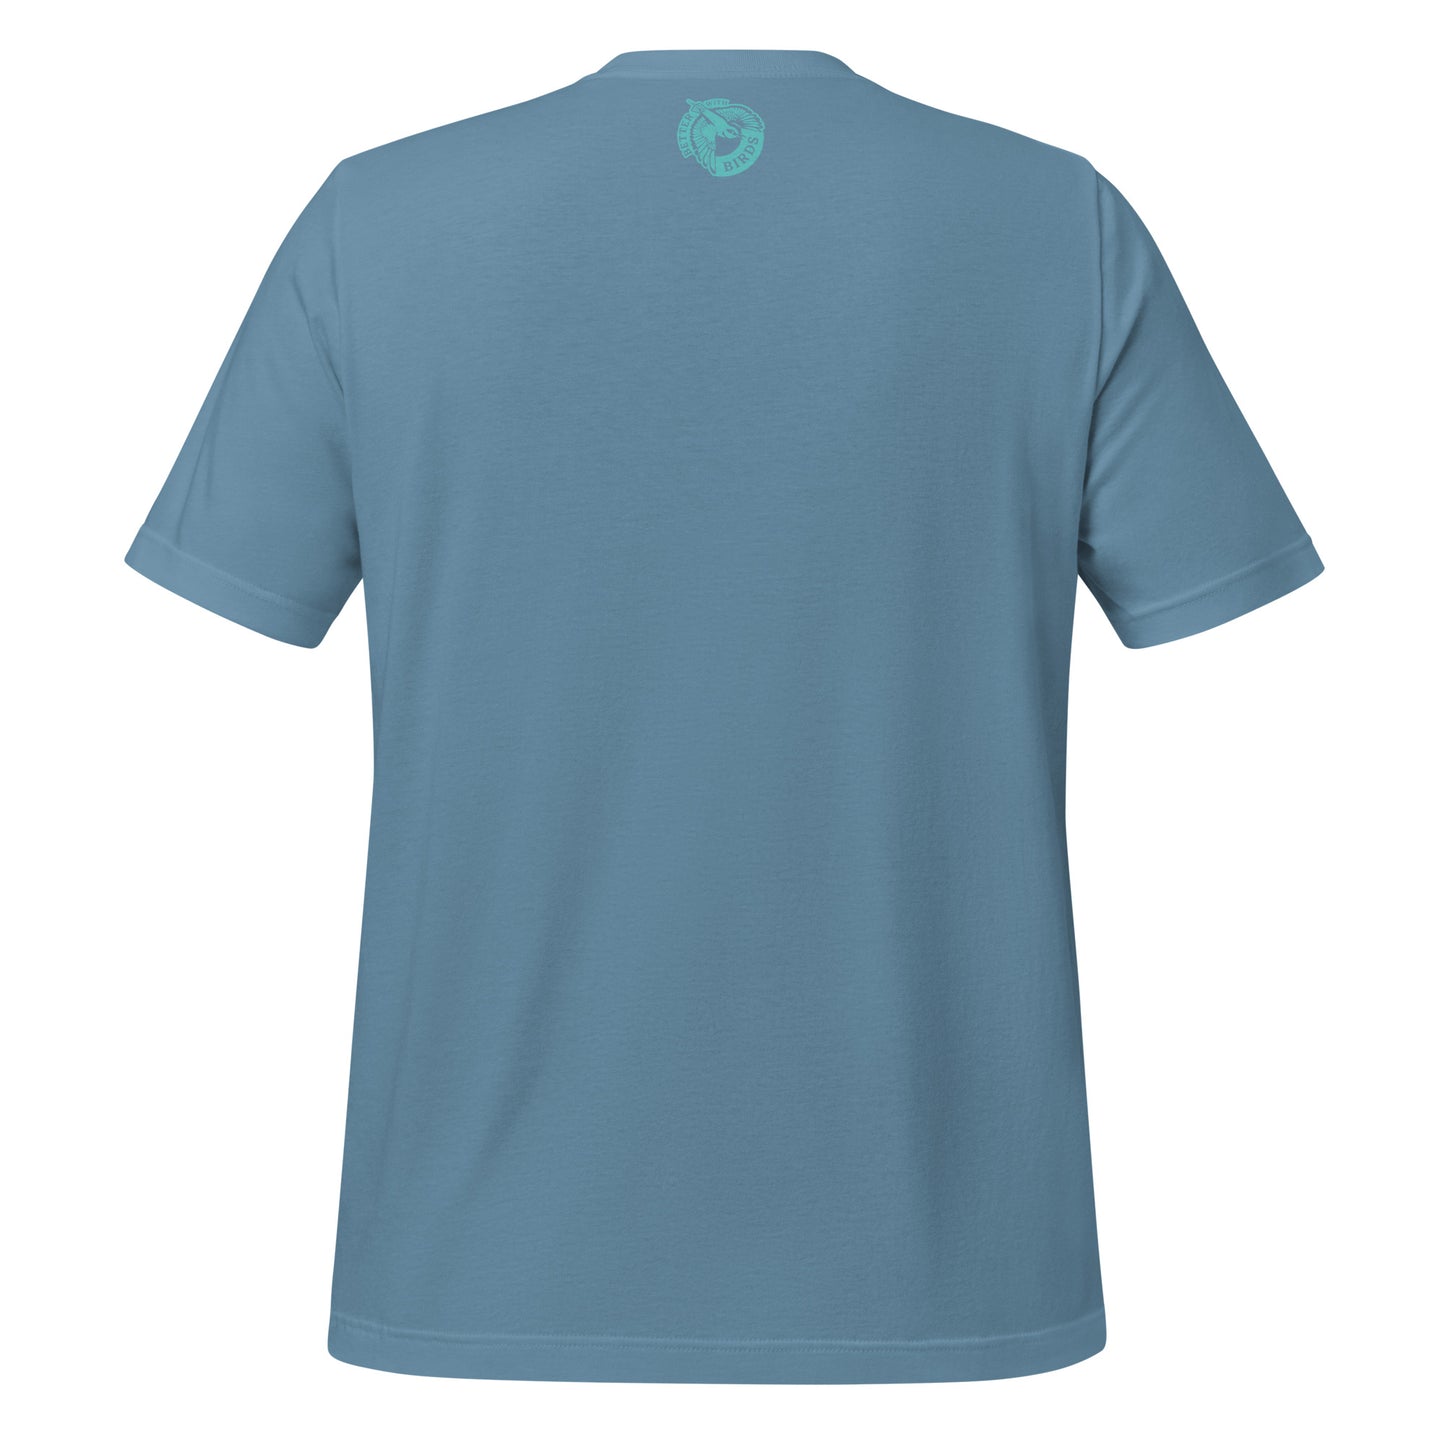 Peregrine Falcon Lightweight Cotton Unisex T-Shirt